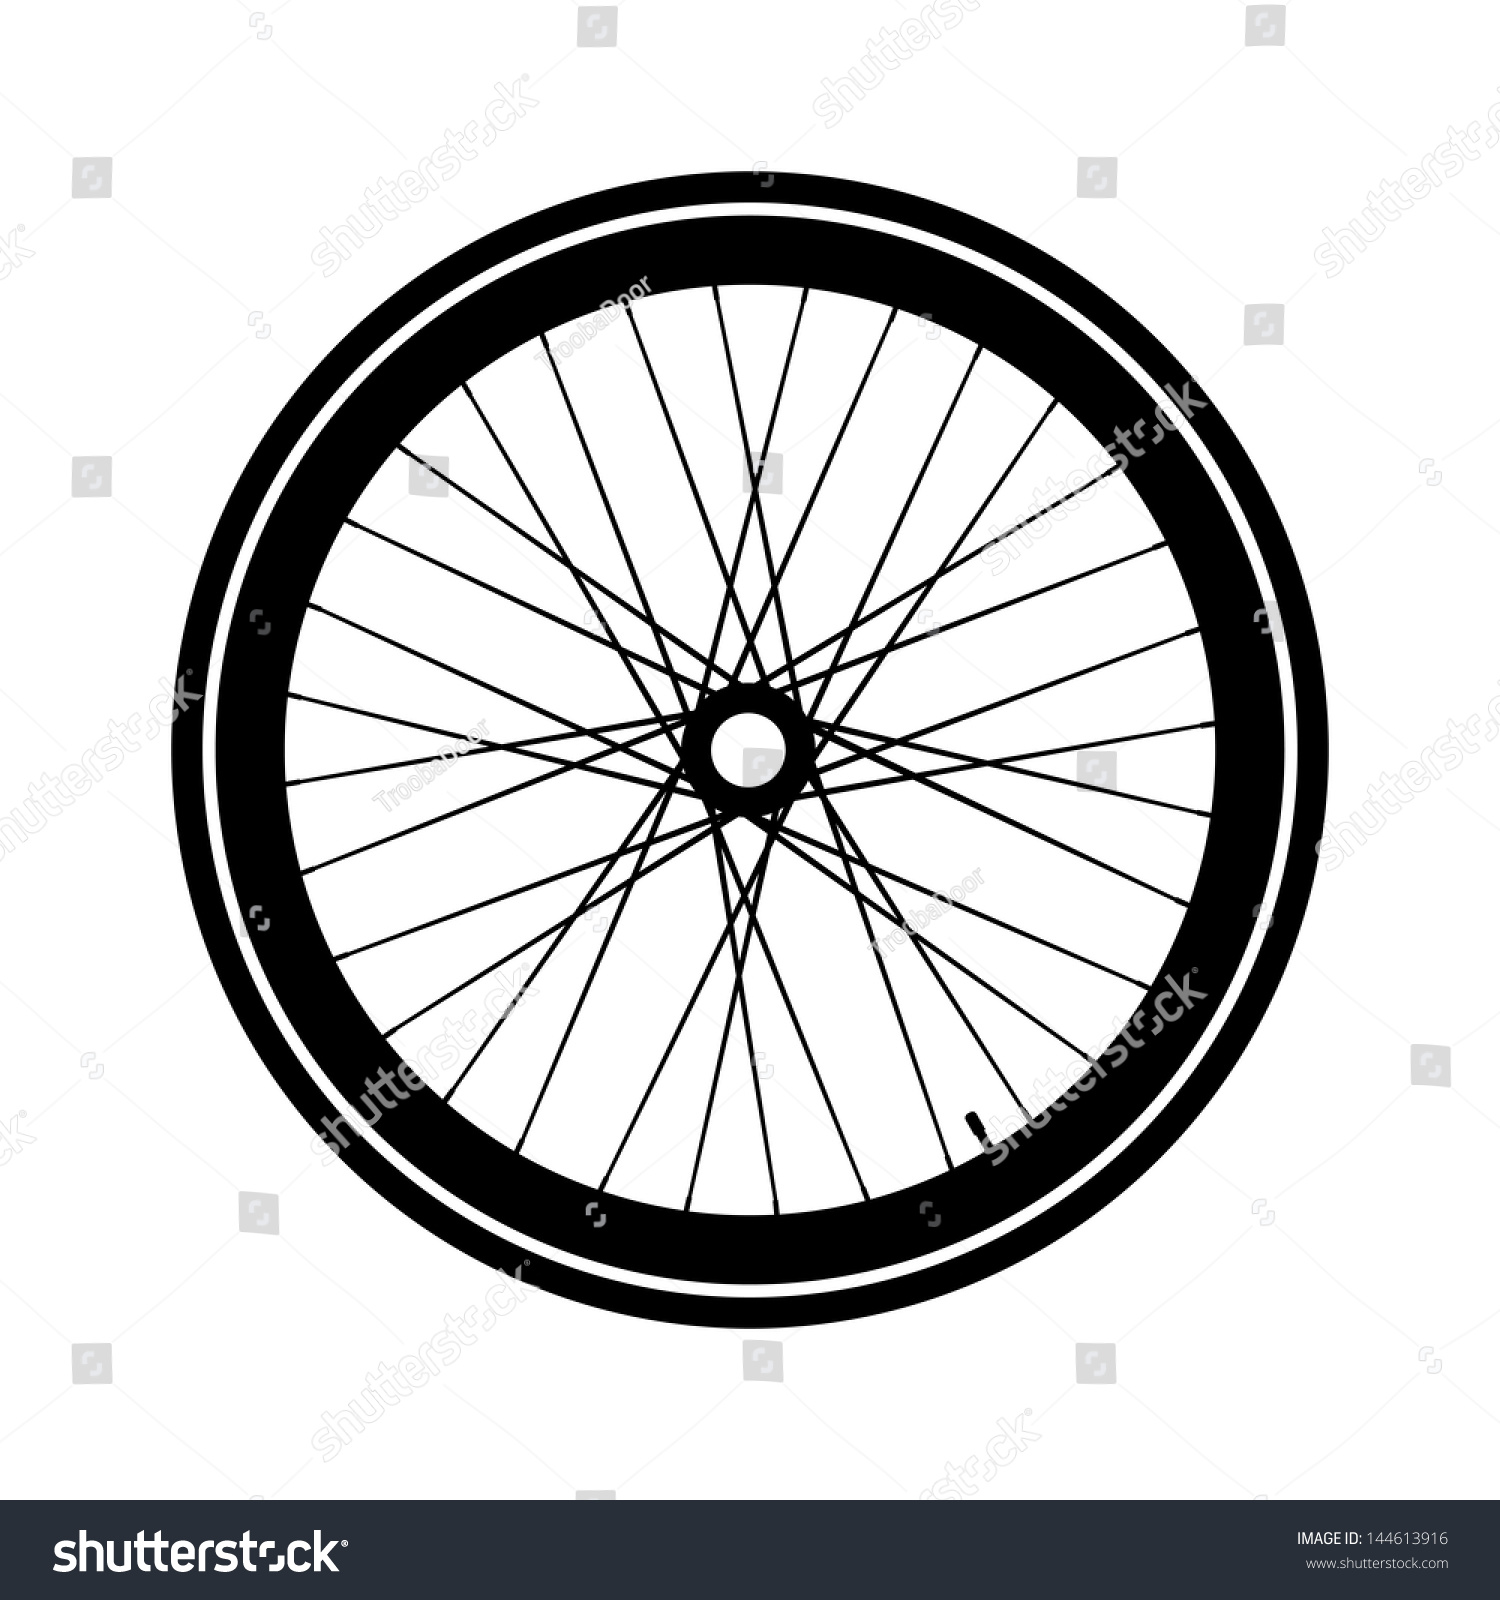 clipart bike wheel - photo #38